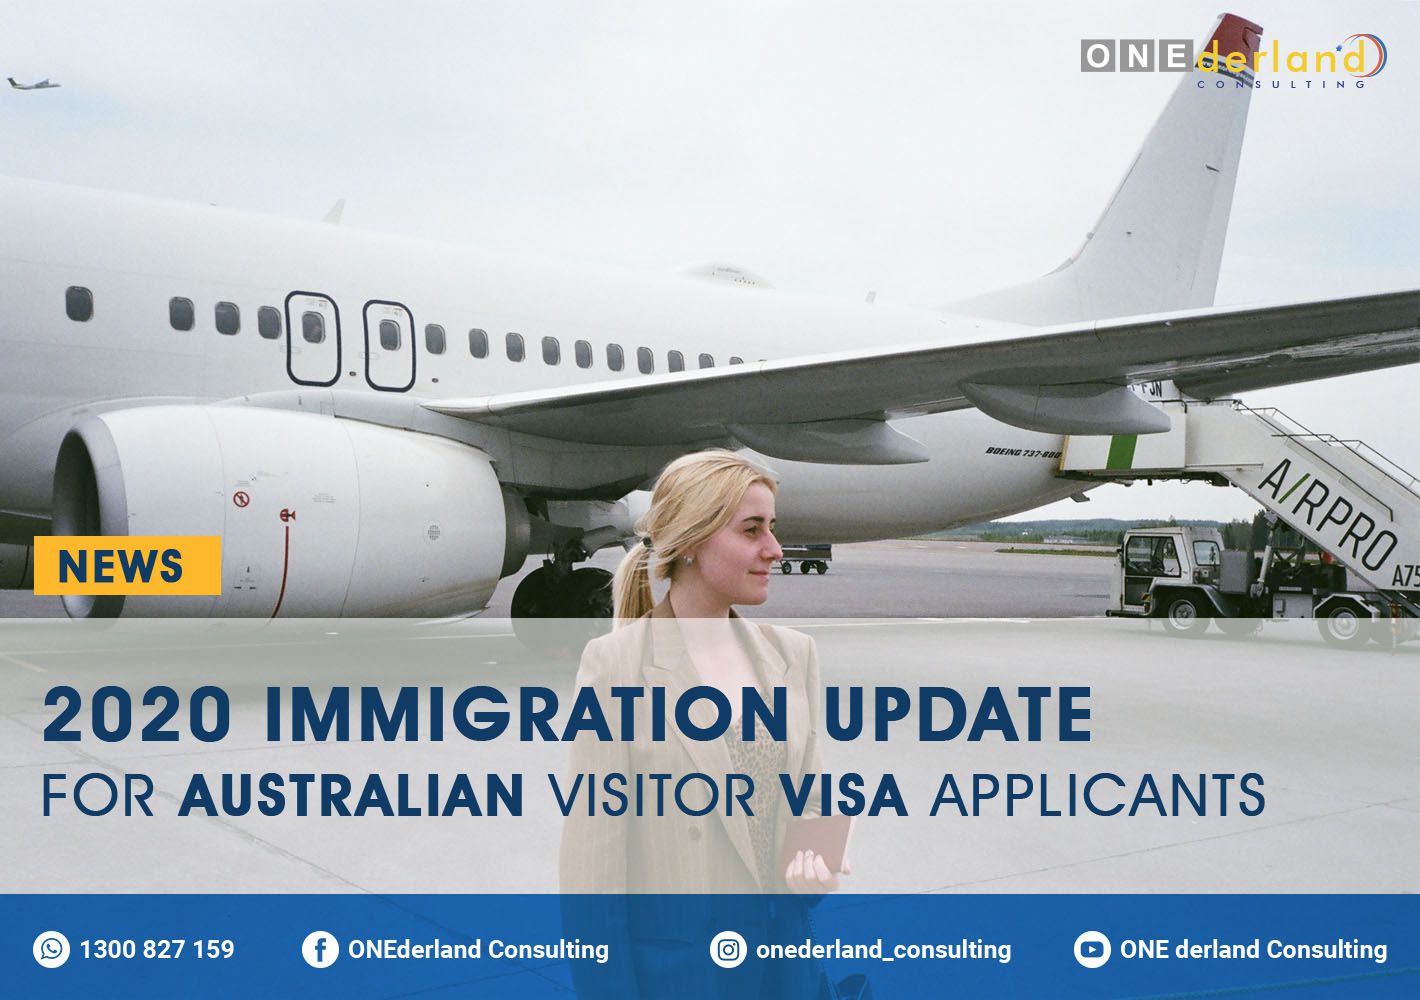 Immigration Update For Australian Visitor Visa Applicants